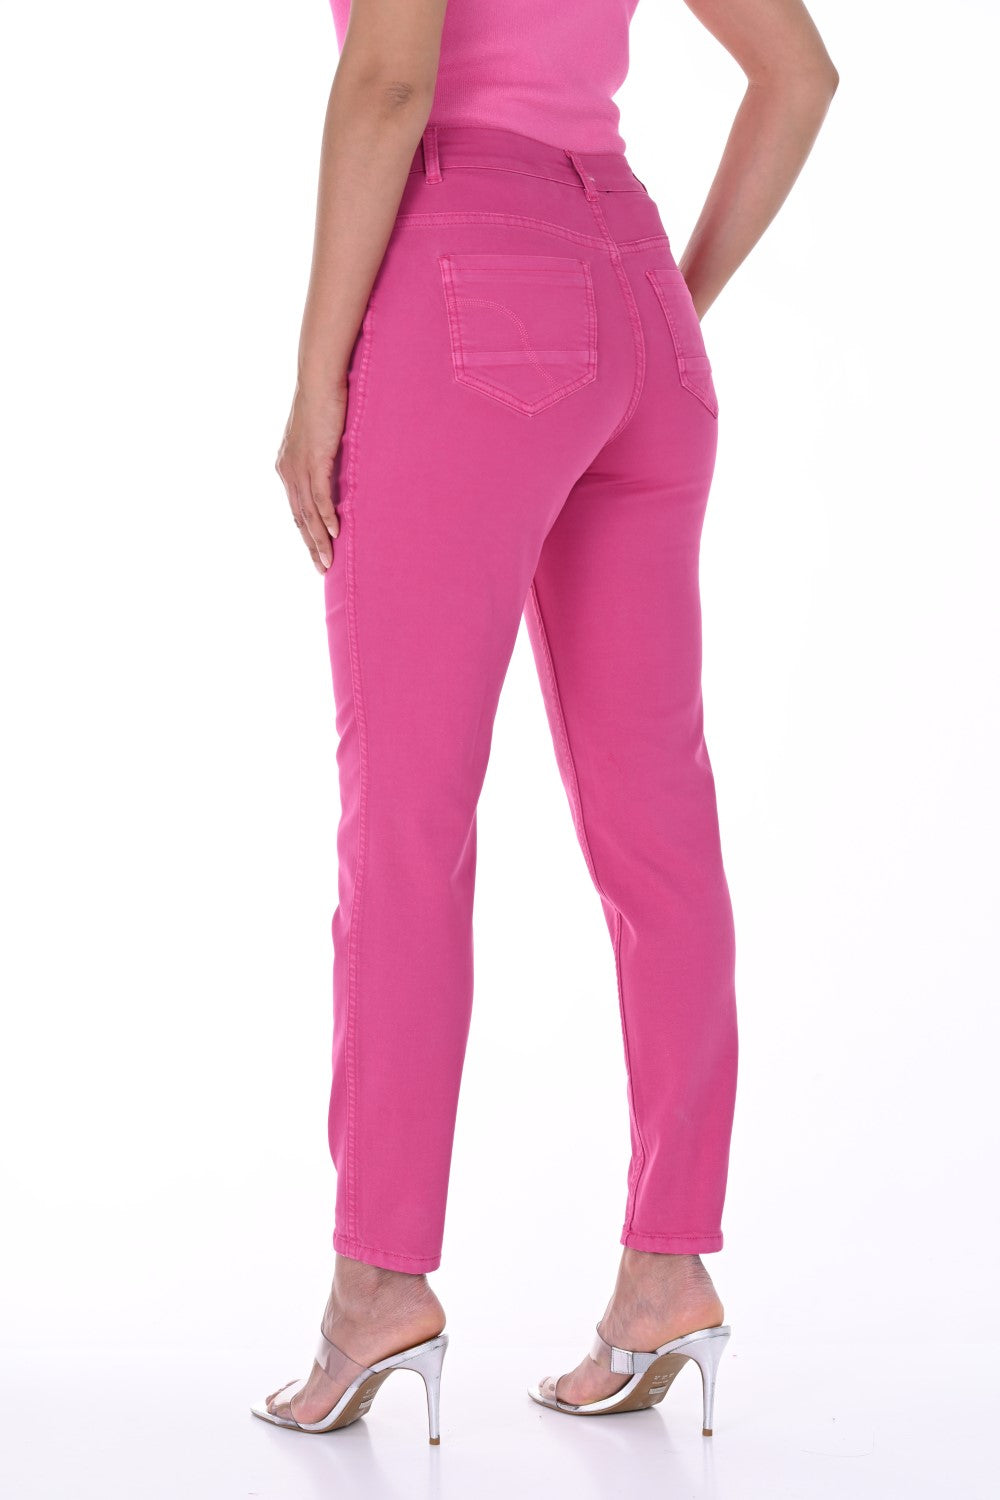 Love - Pink Sweatpants by Lyman Creative Co